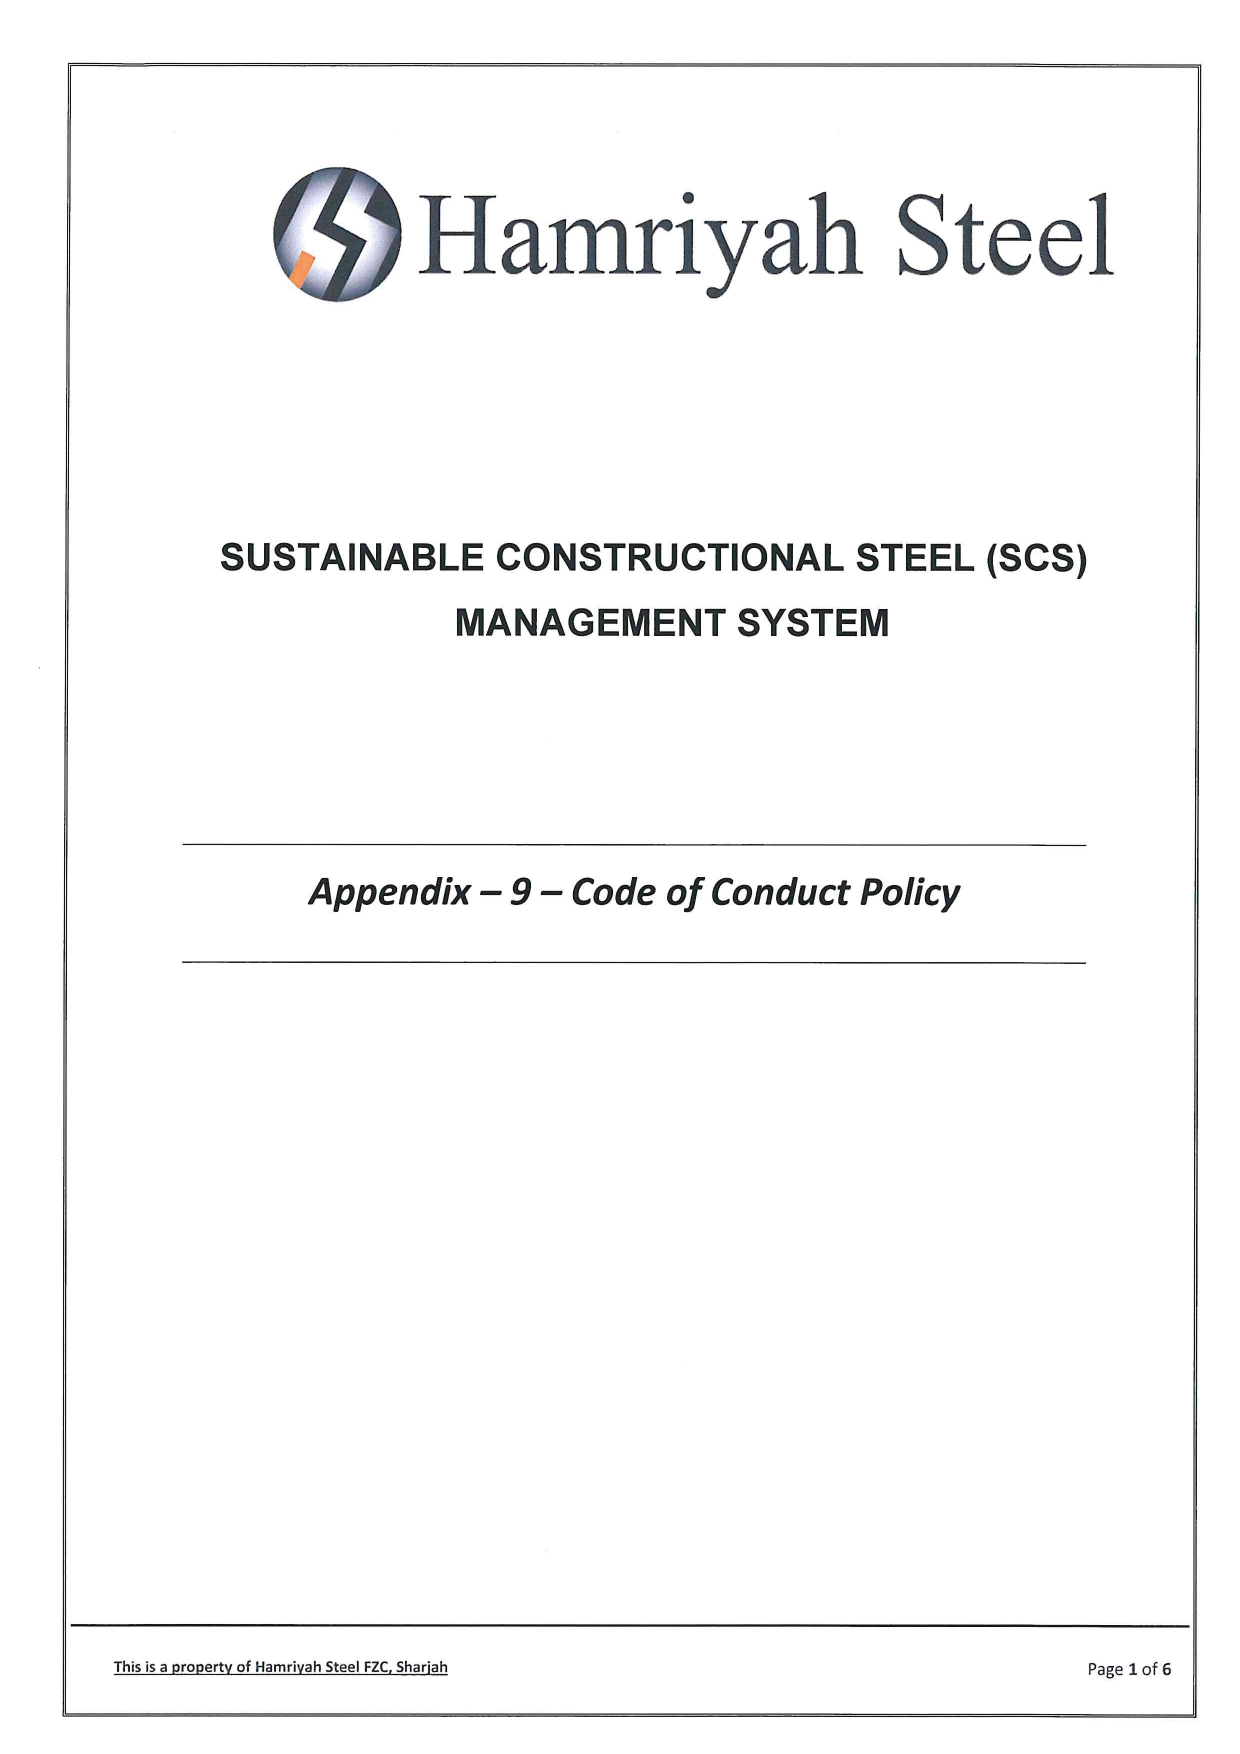 hamriyah steel code of conduct